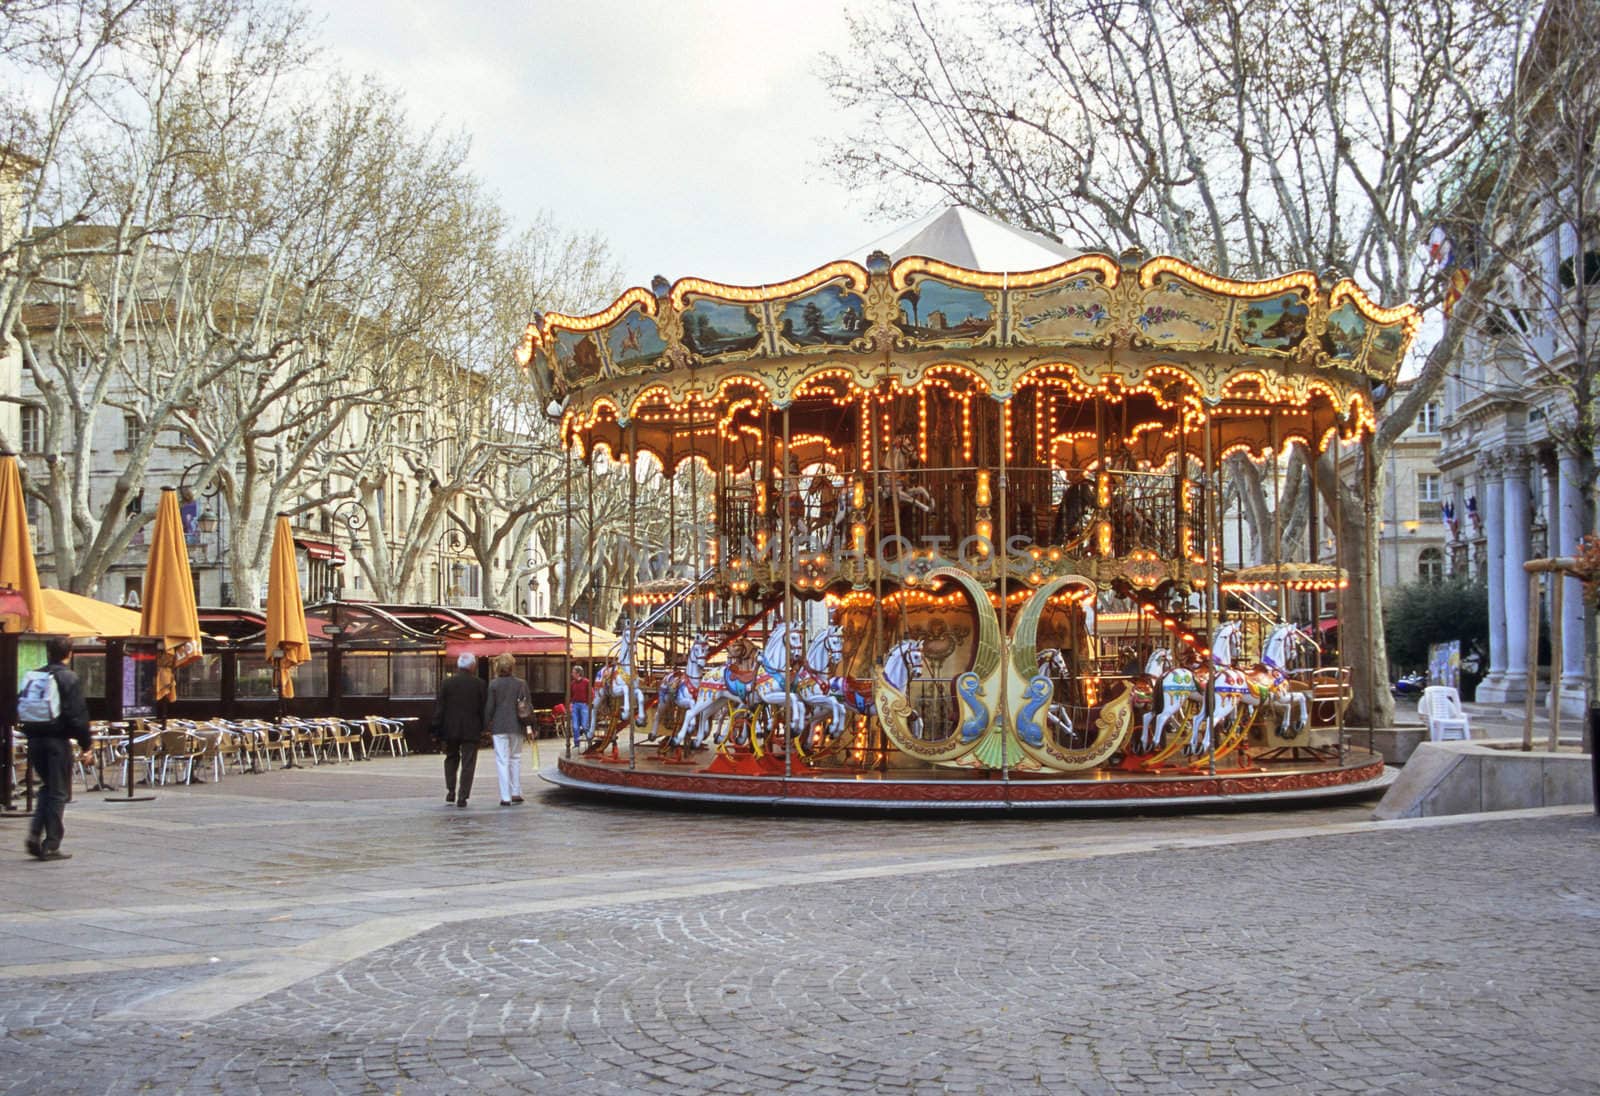 Carousel Avignon Market Square by ACMPhoto